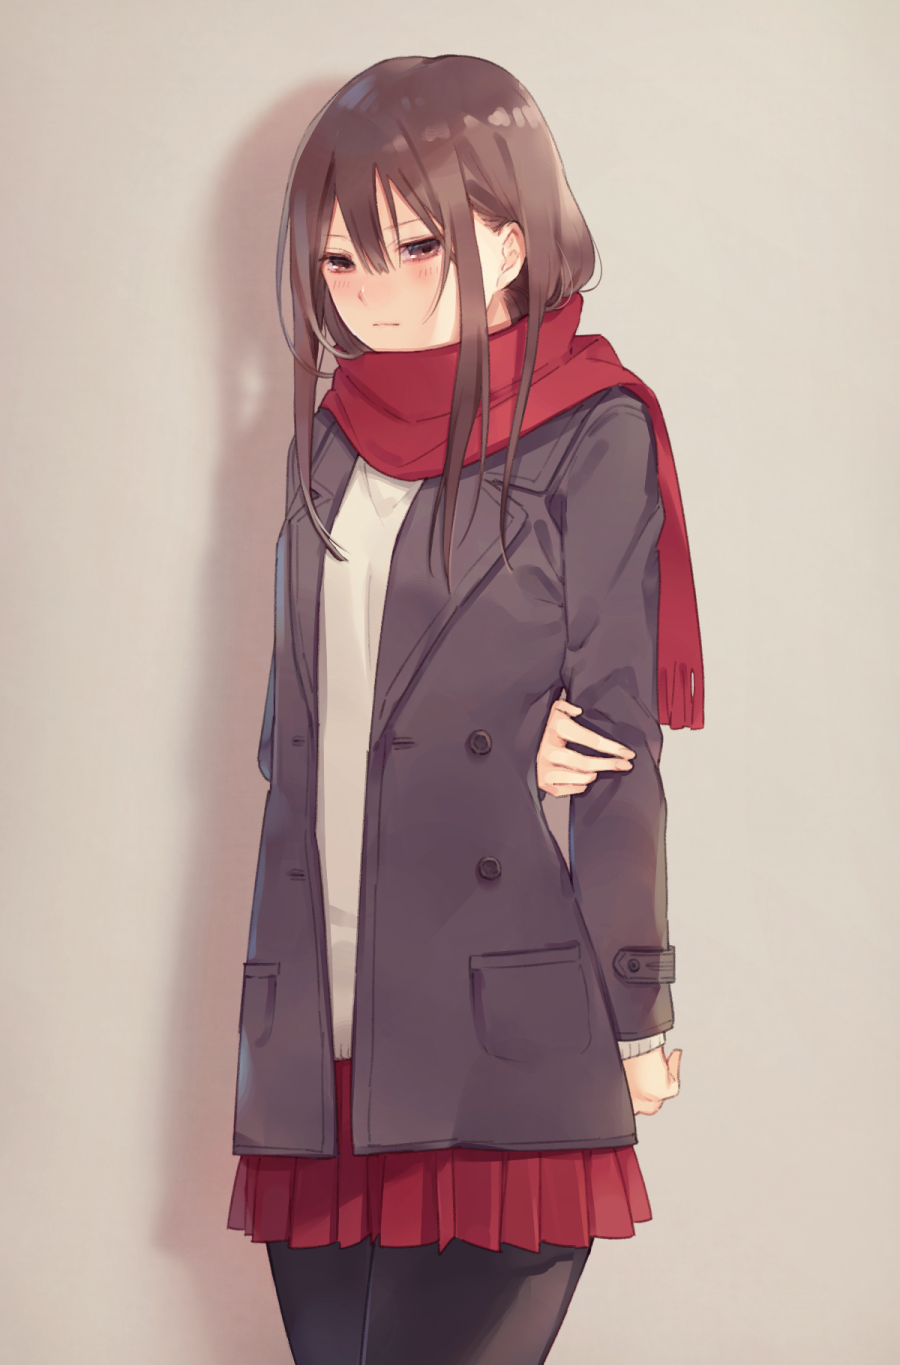 anime girl hot and shy